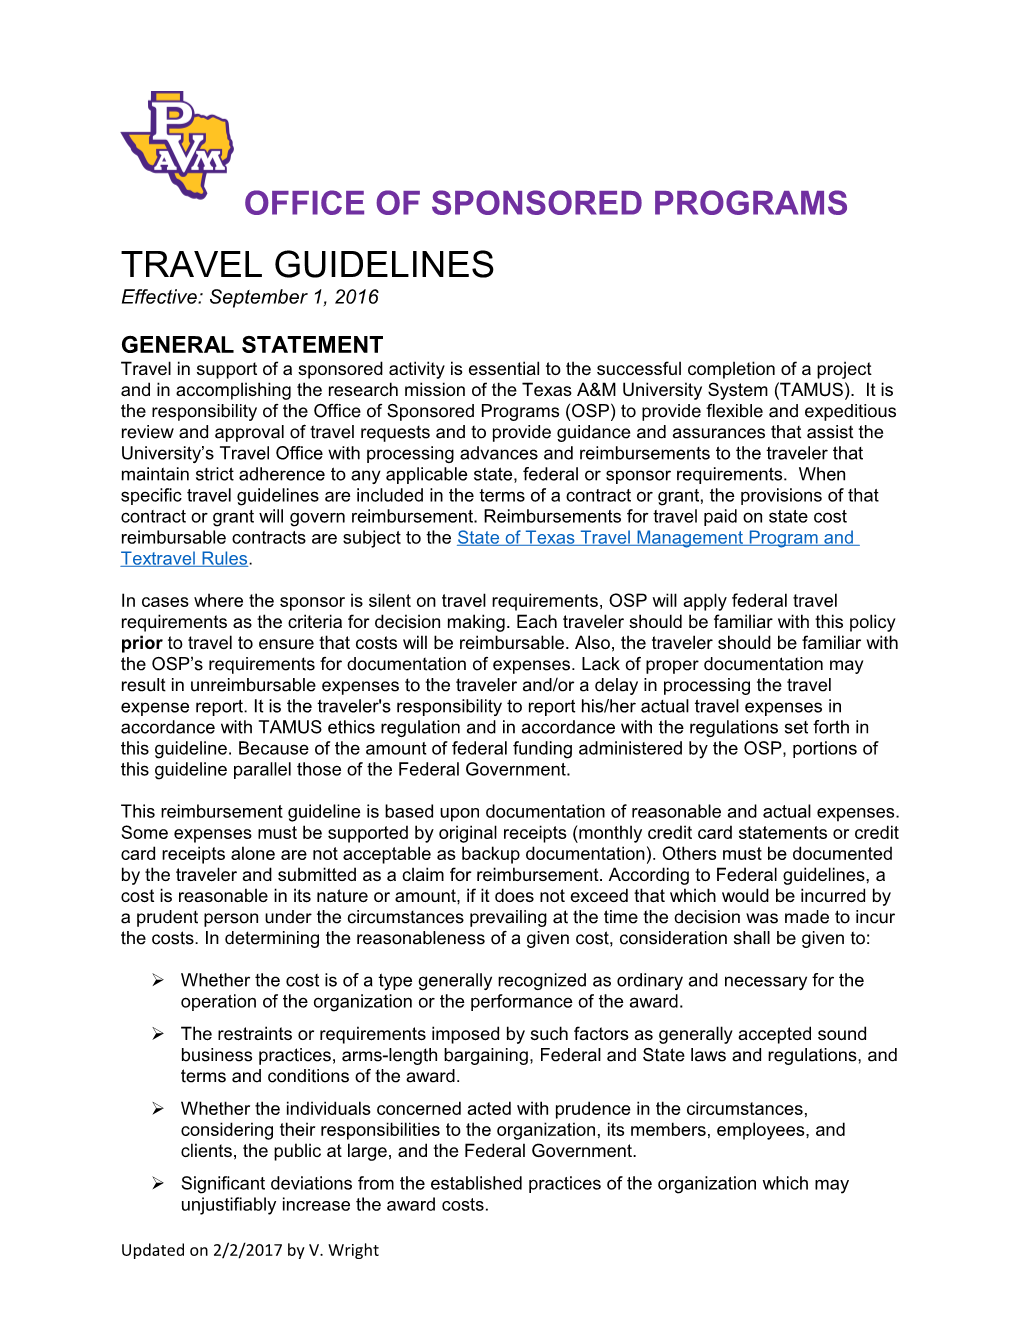 Office of Sponsored Programs/Travel Guidelines